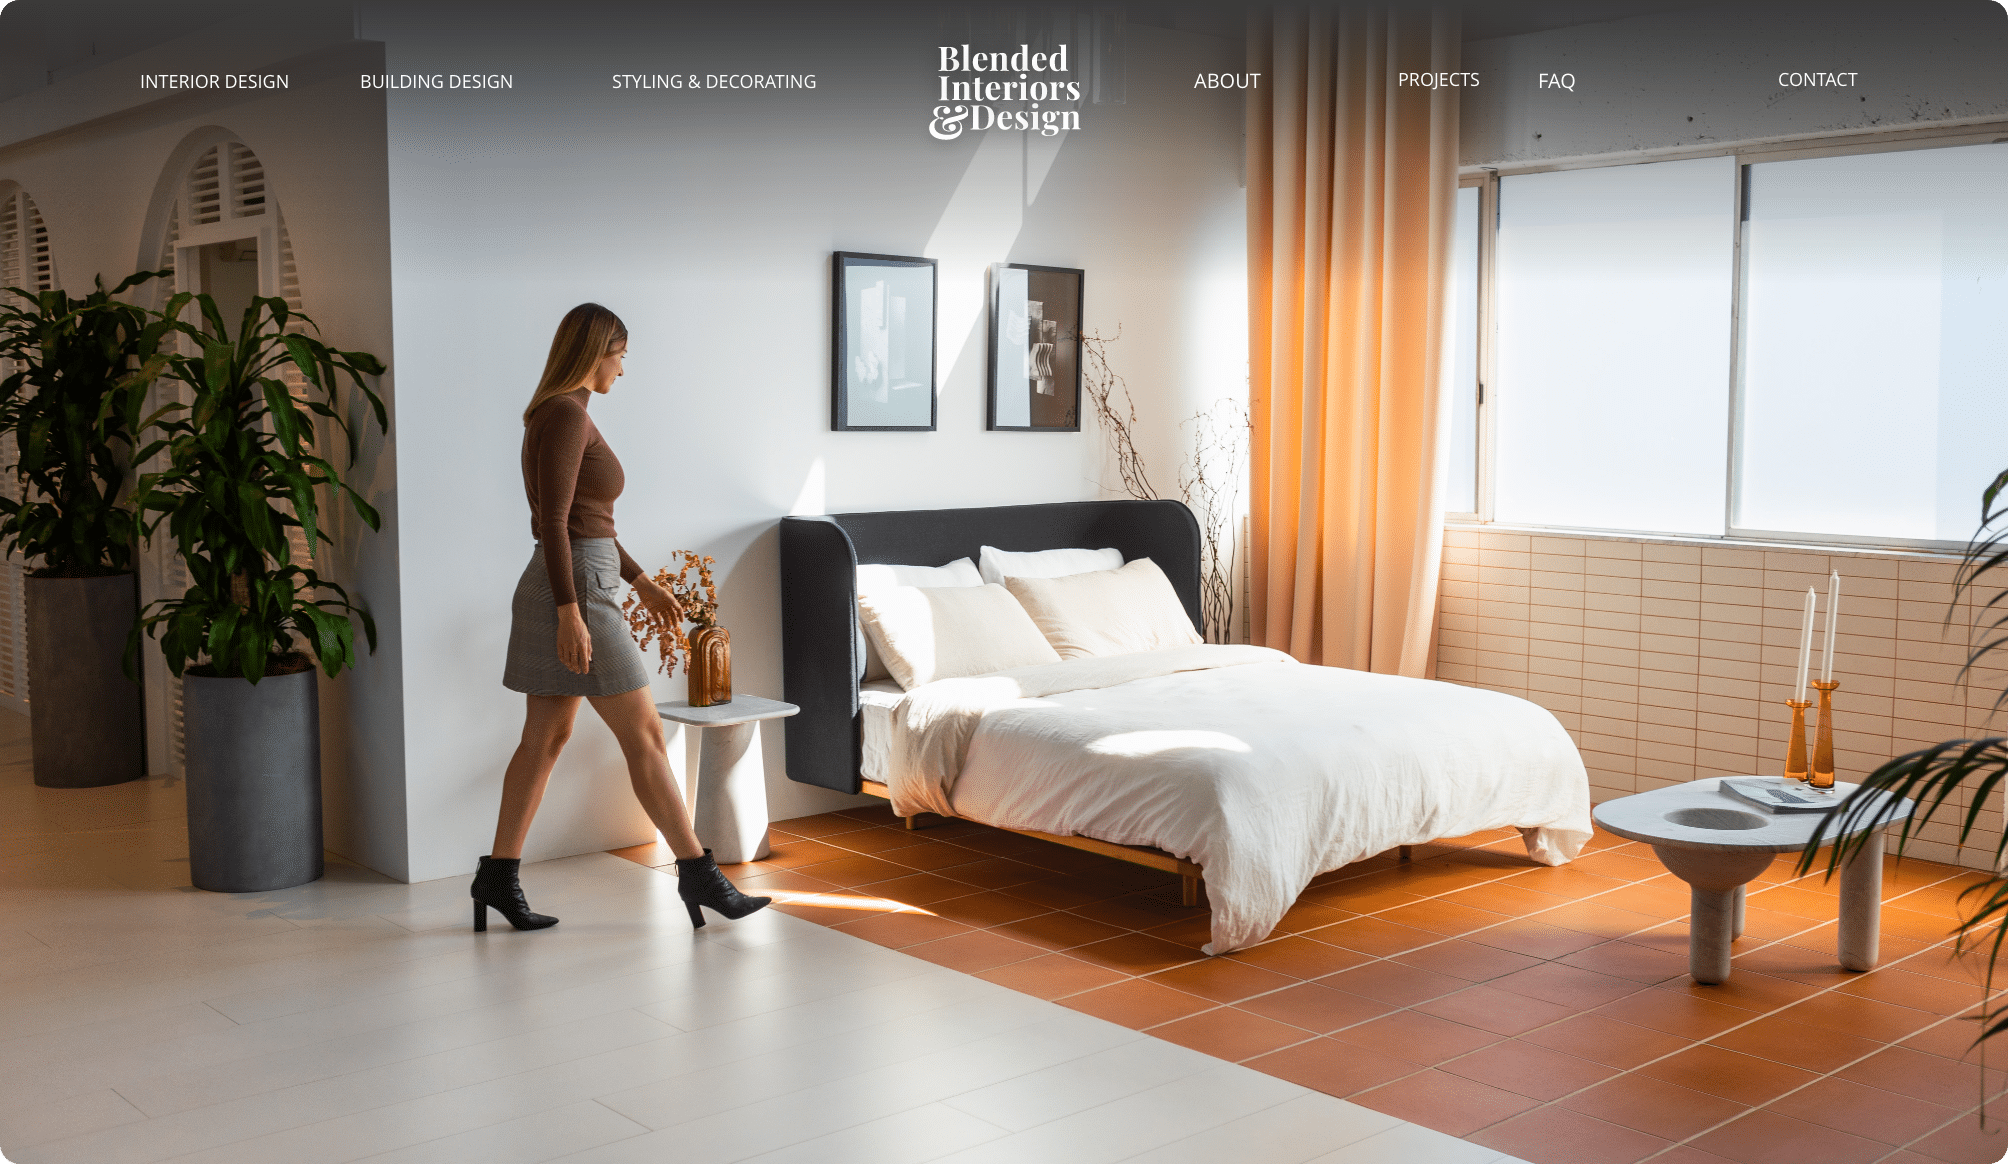 Blended Interiors & Design website